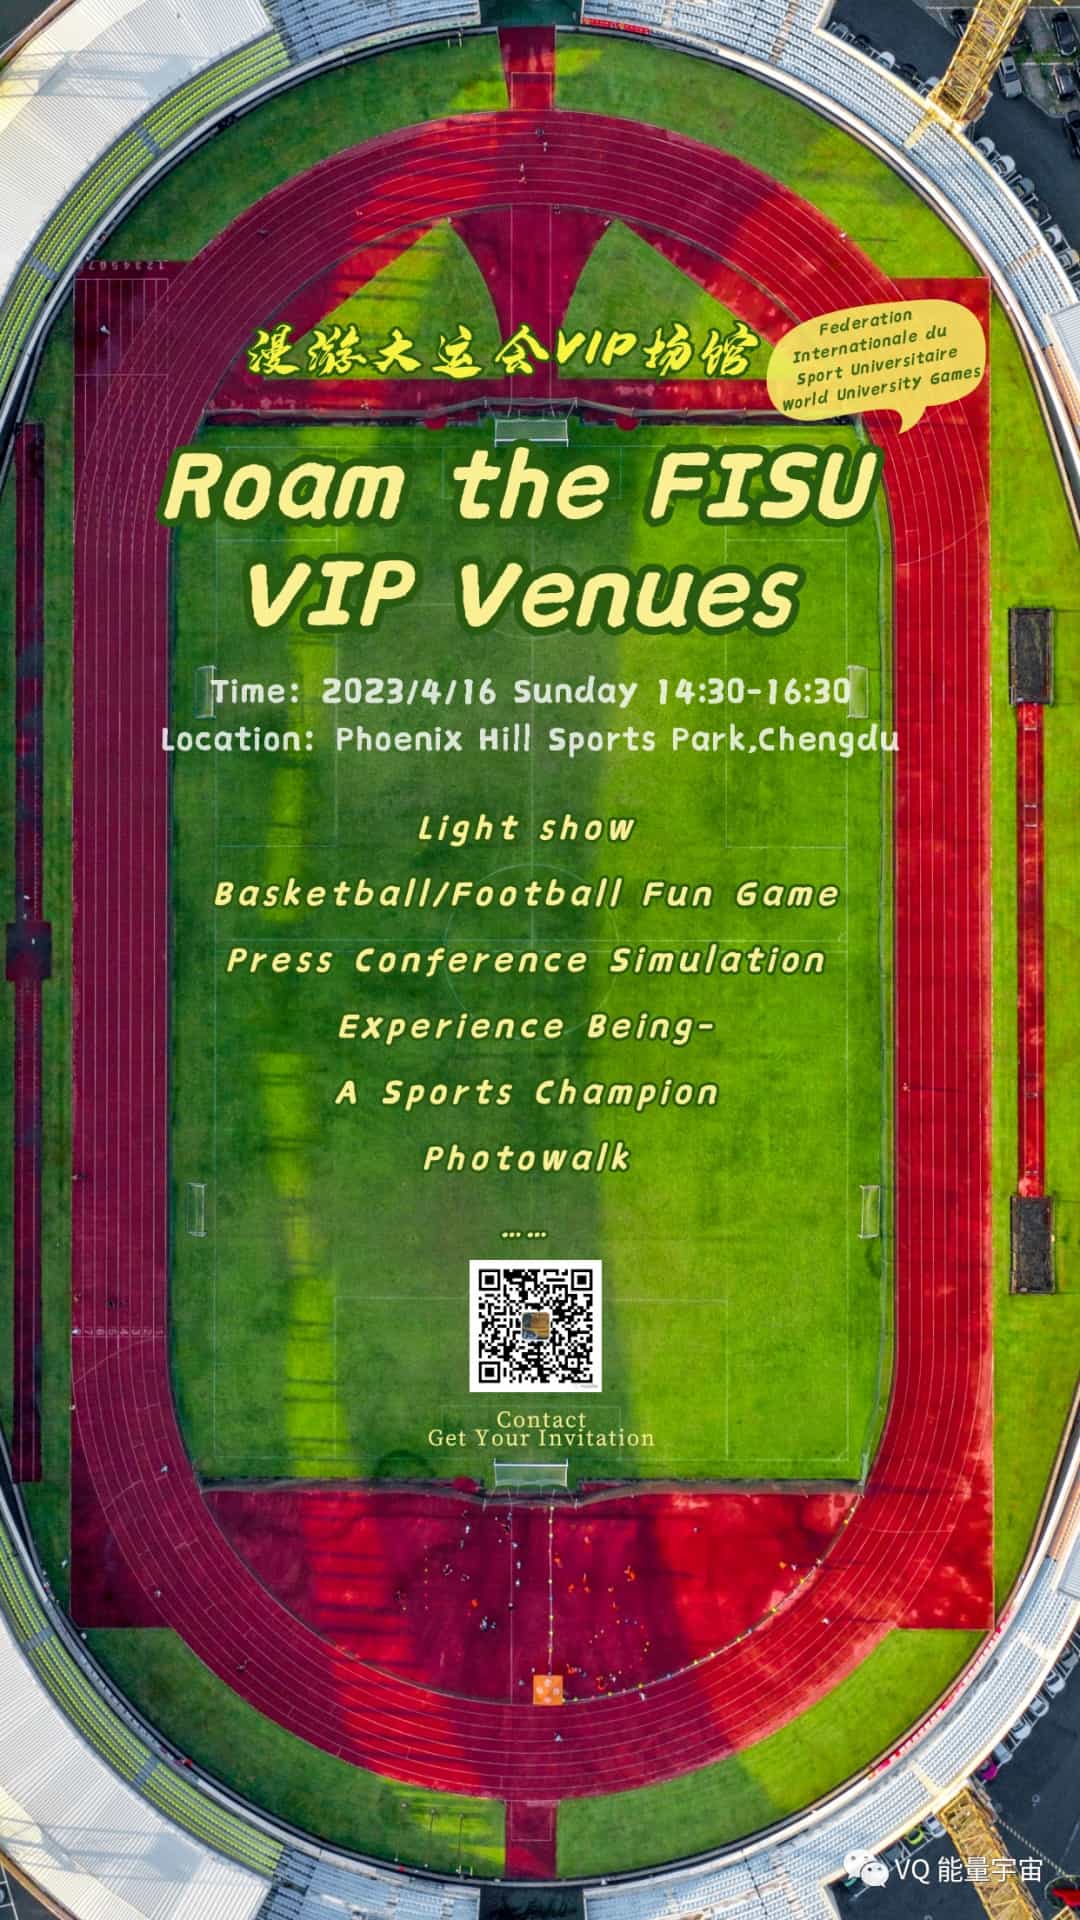 FISU venues event chengdu expat